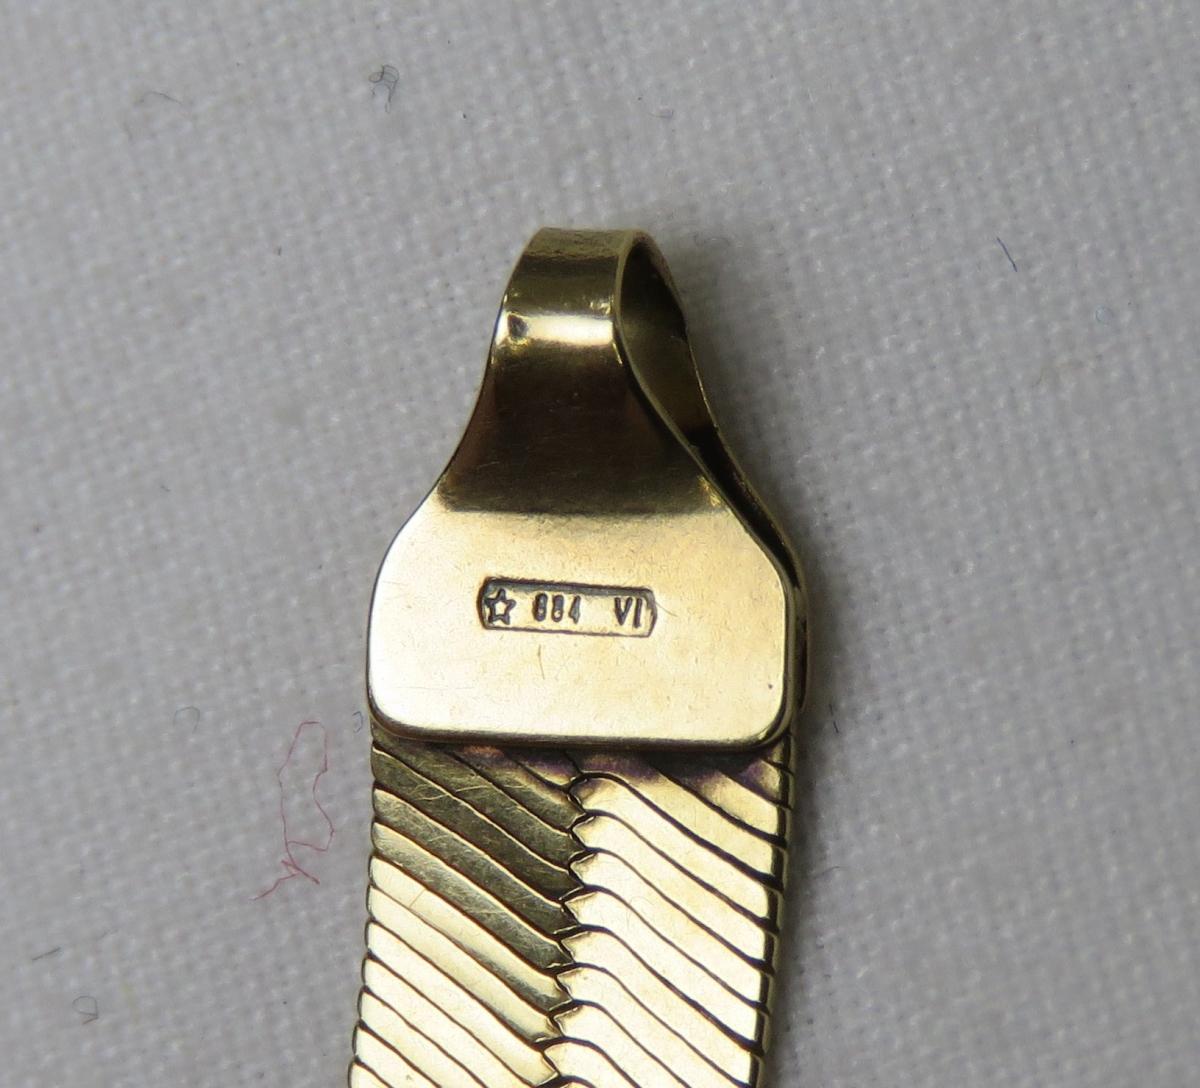 14kt 884VI Yellow Gold Italian Bracelet